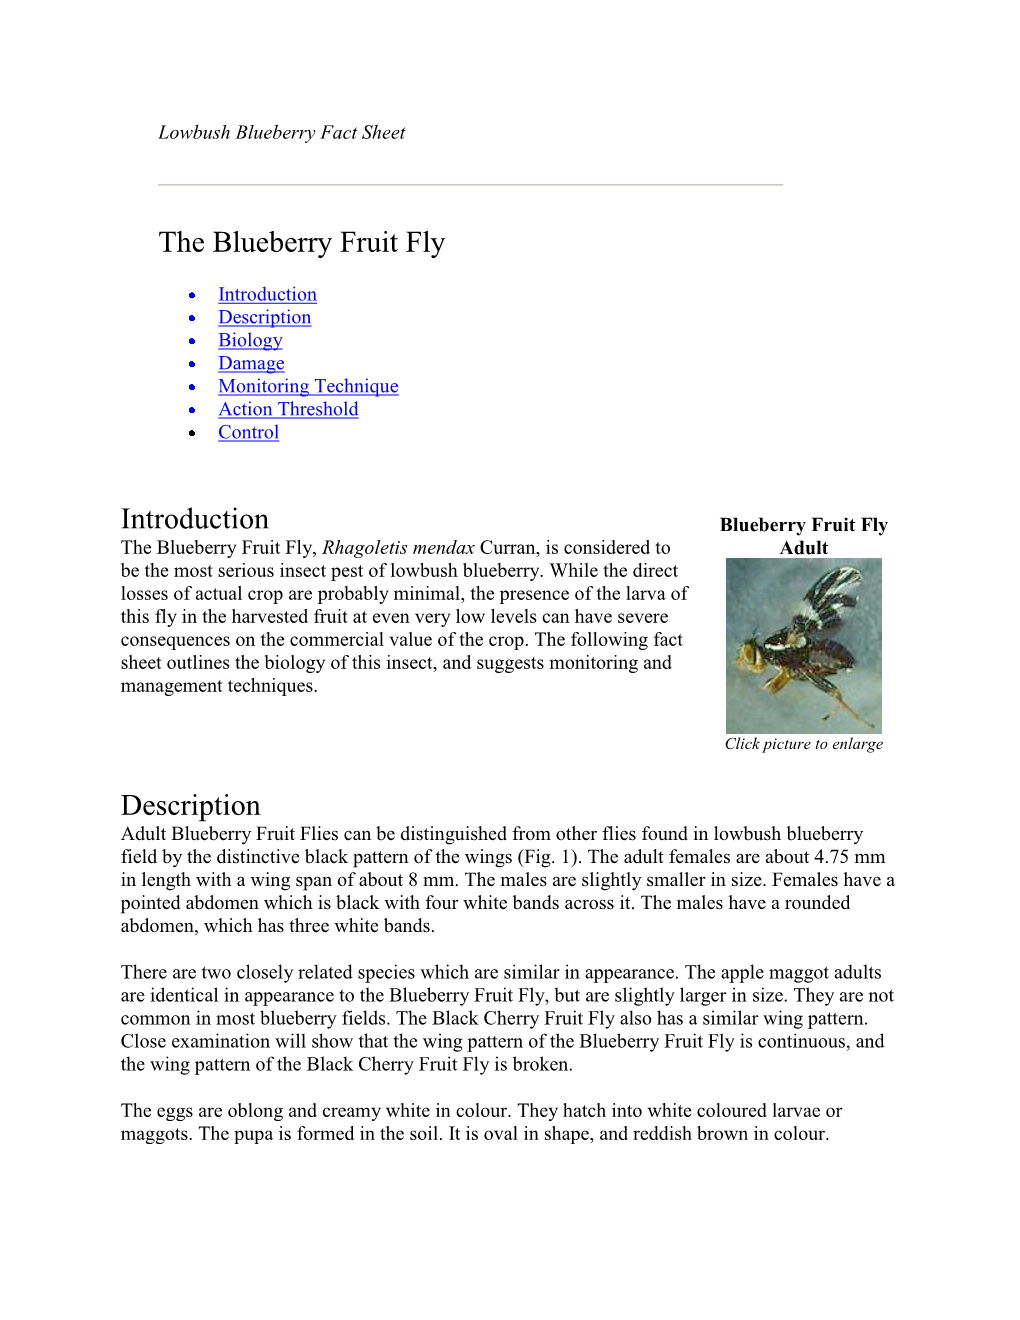 The Blueberry Fruit Fly Introduction Description